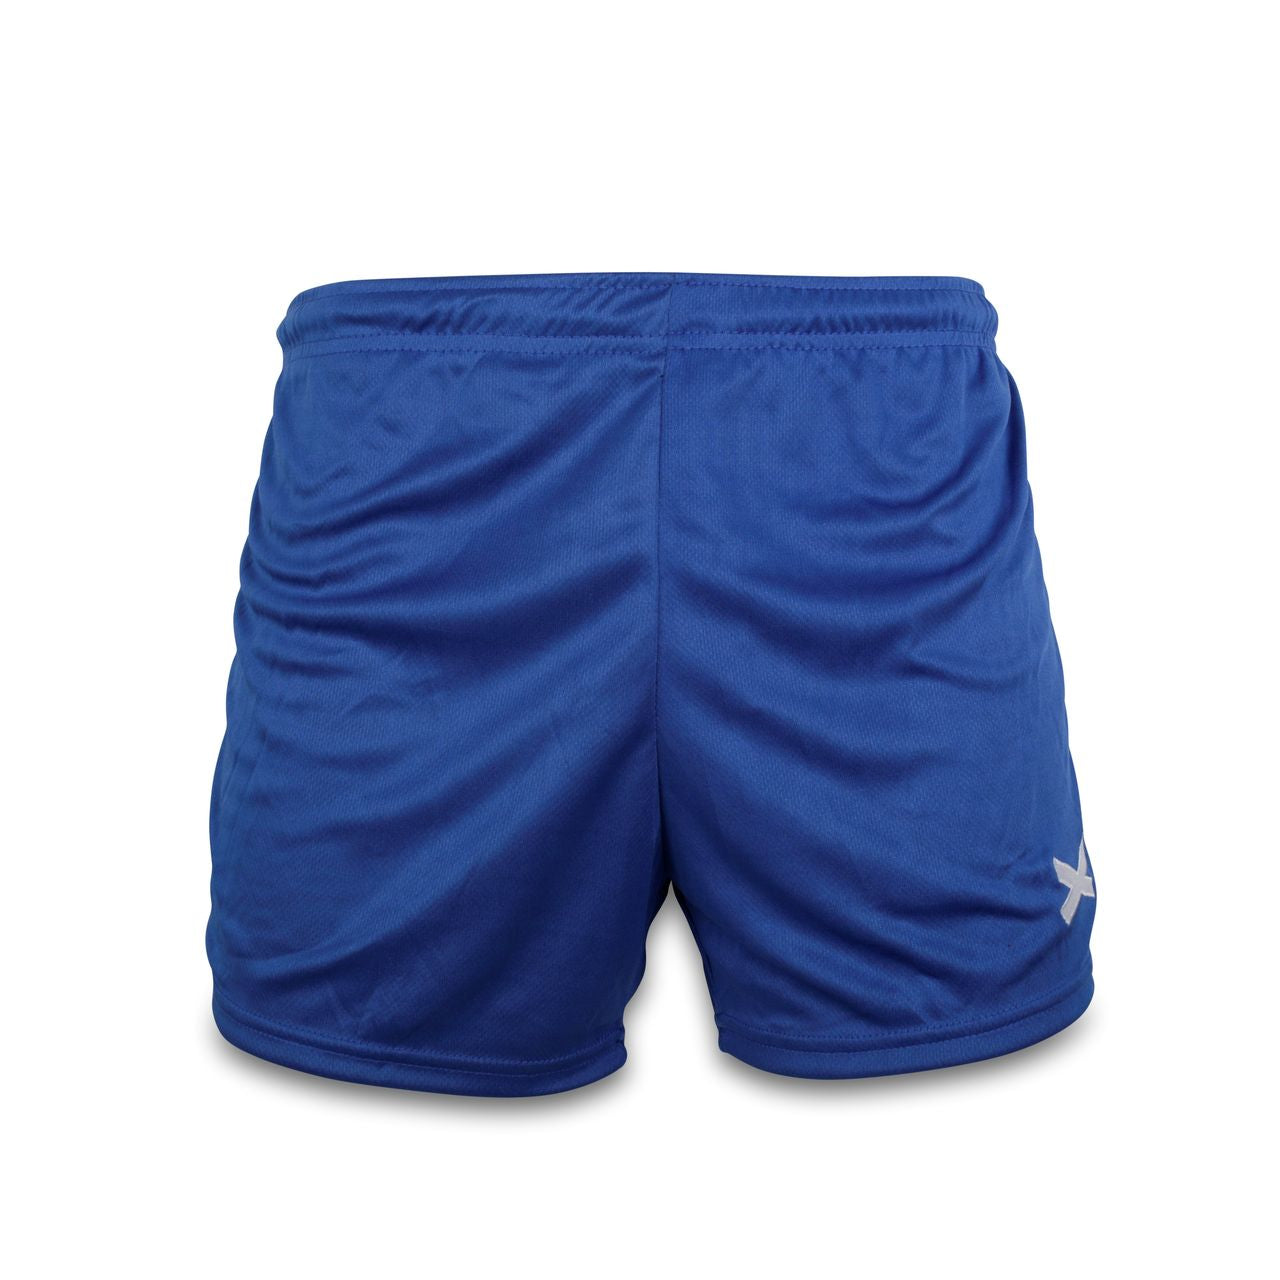 GAA Shorts Blue with White Stripes Gaelic Games Sportswear